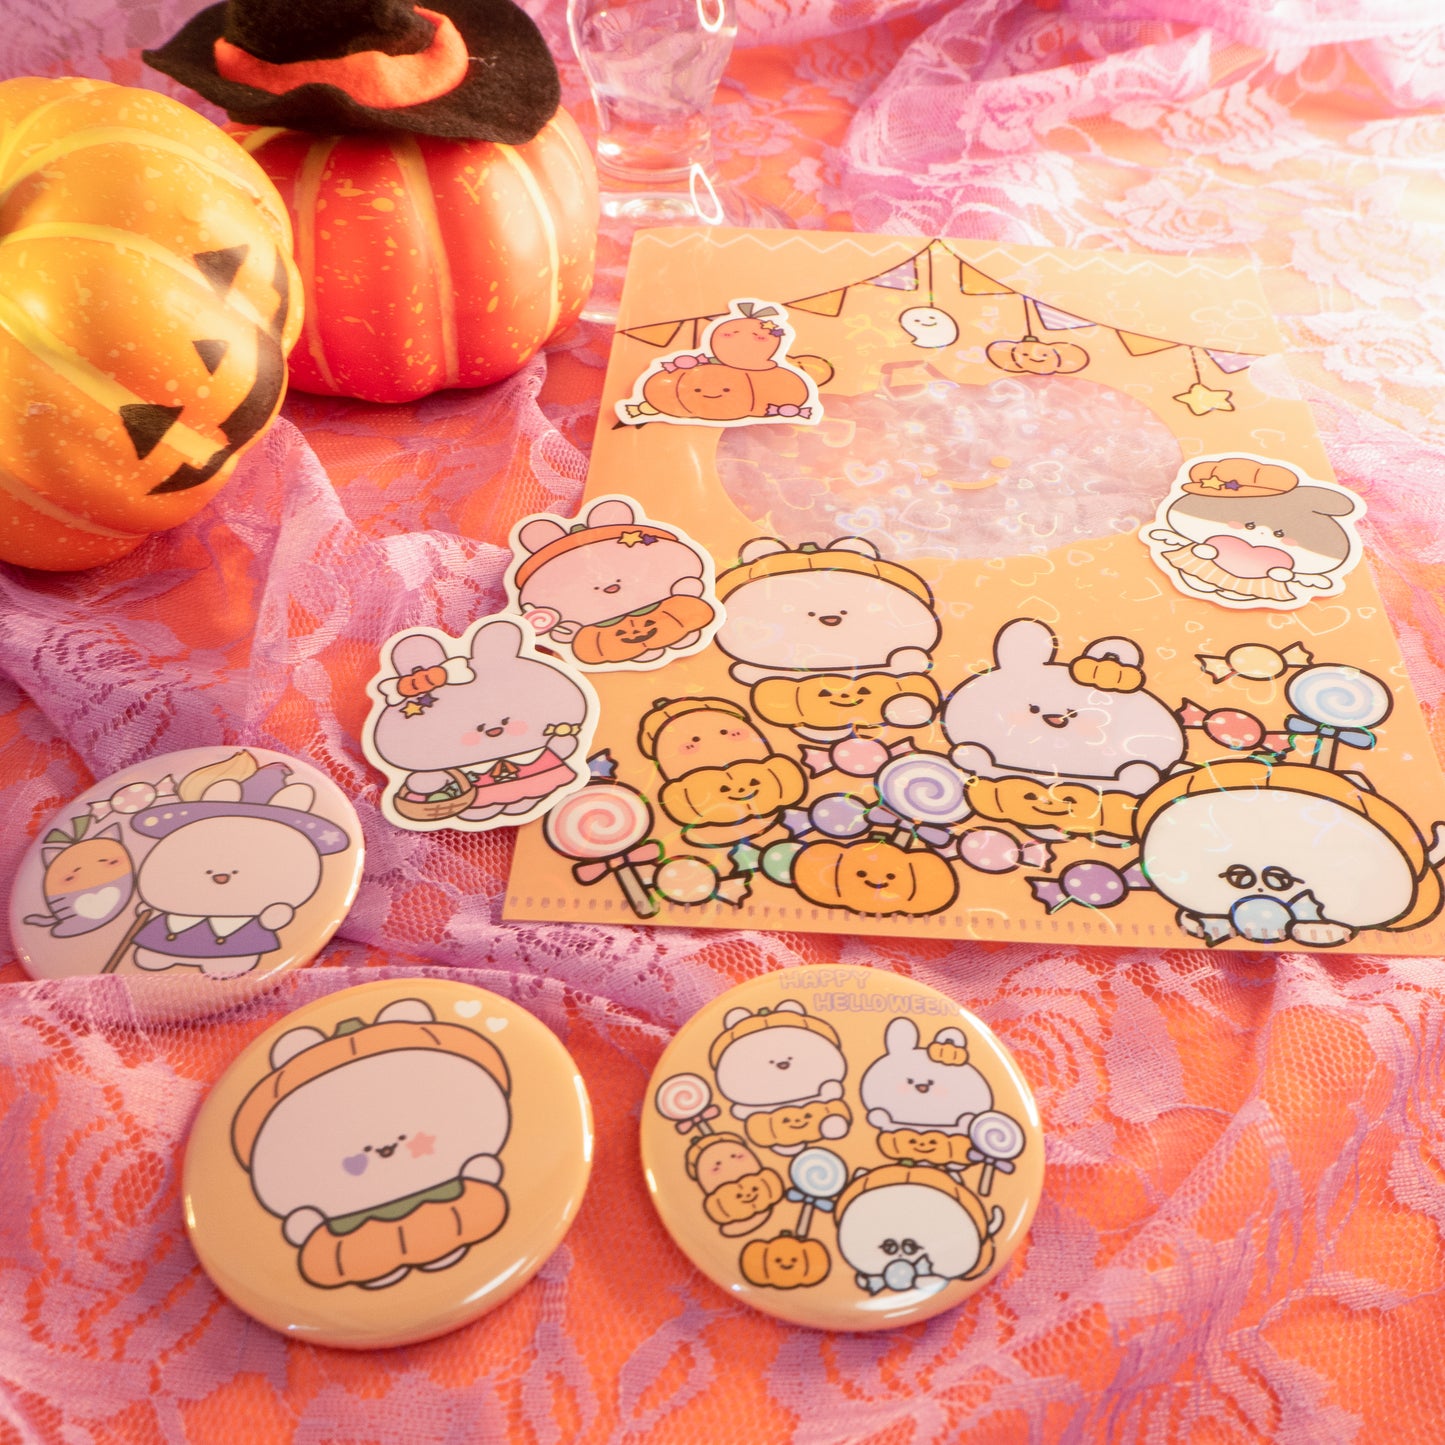 [Asamimi-chan] Badge en étain aléatoire Happy Halloween (les 3 types) [expédié fin octobre]